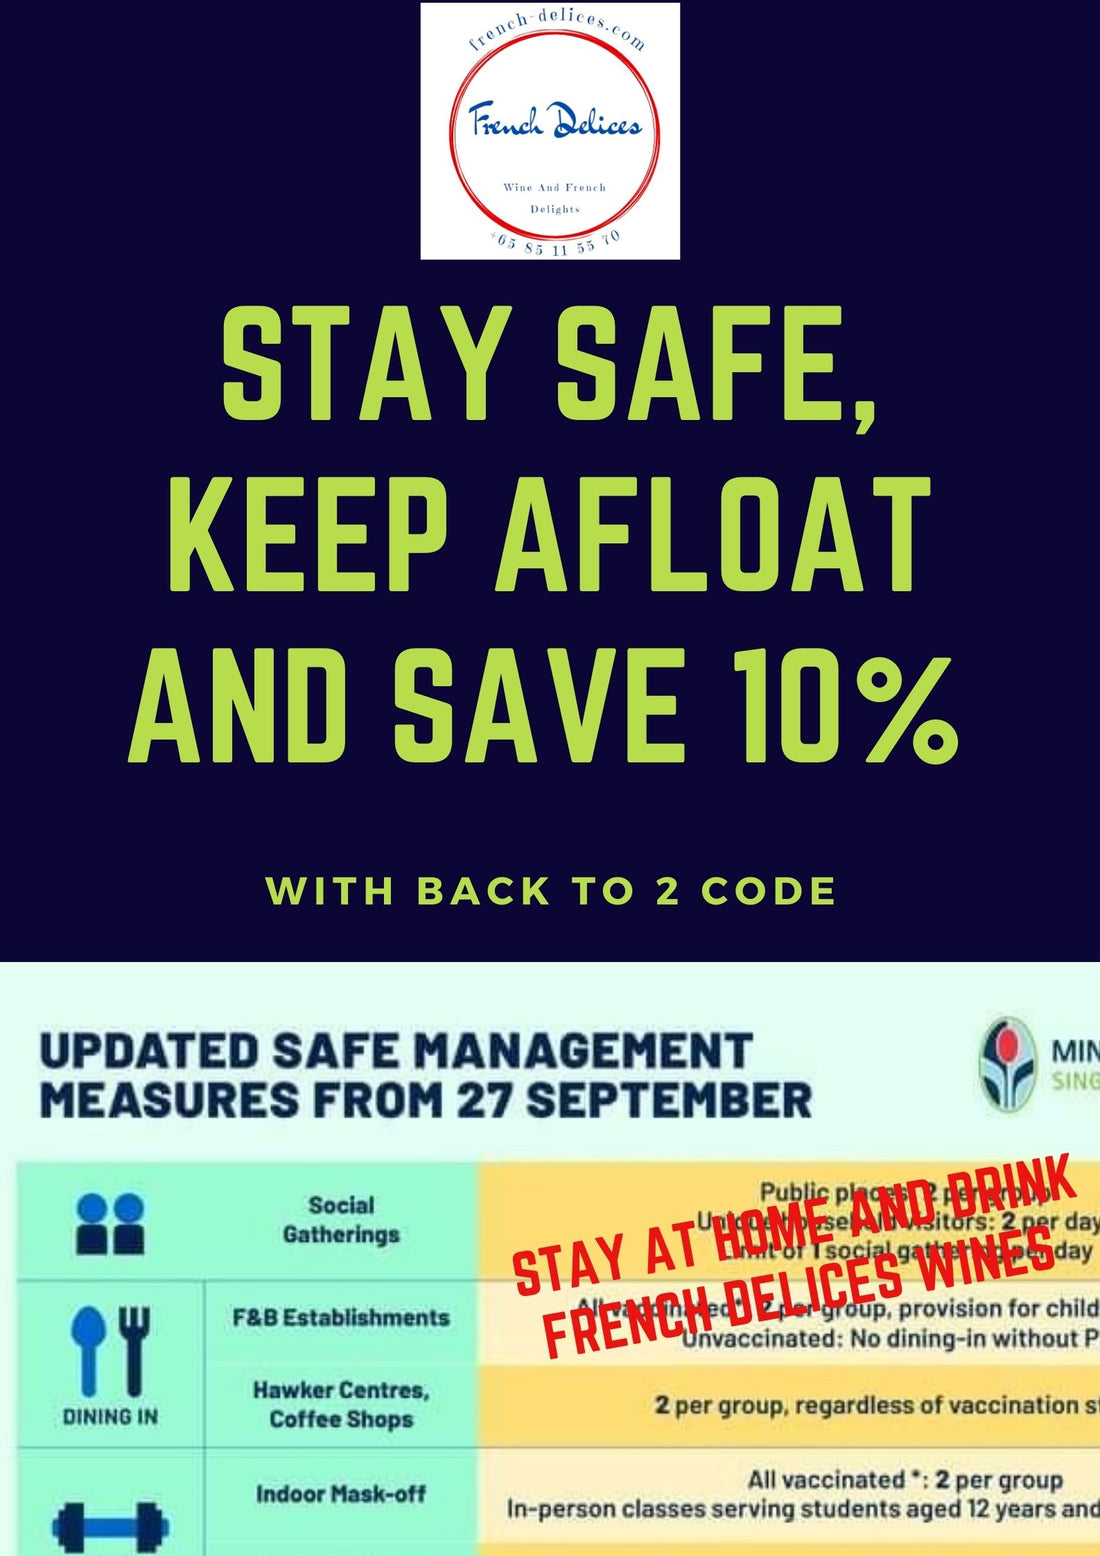 Keep safe and enjoy a 10% rebate